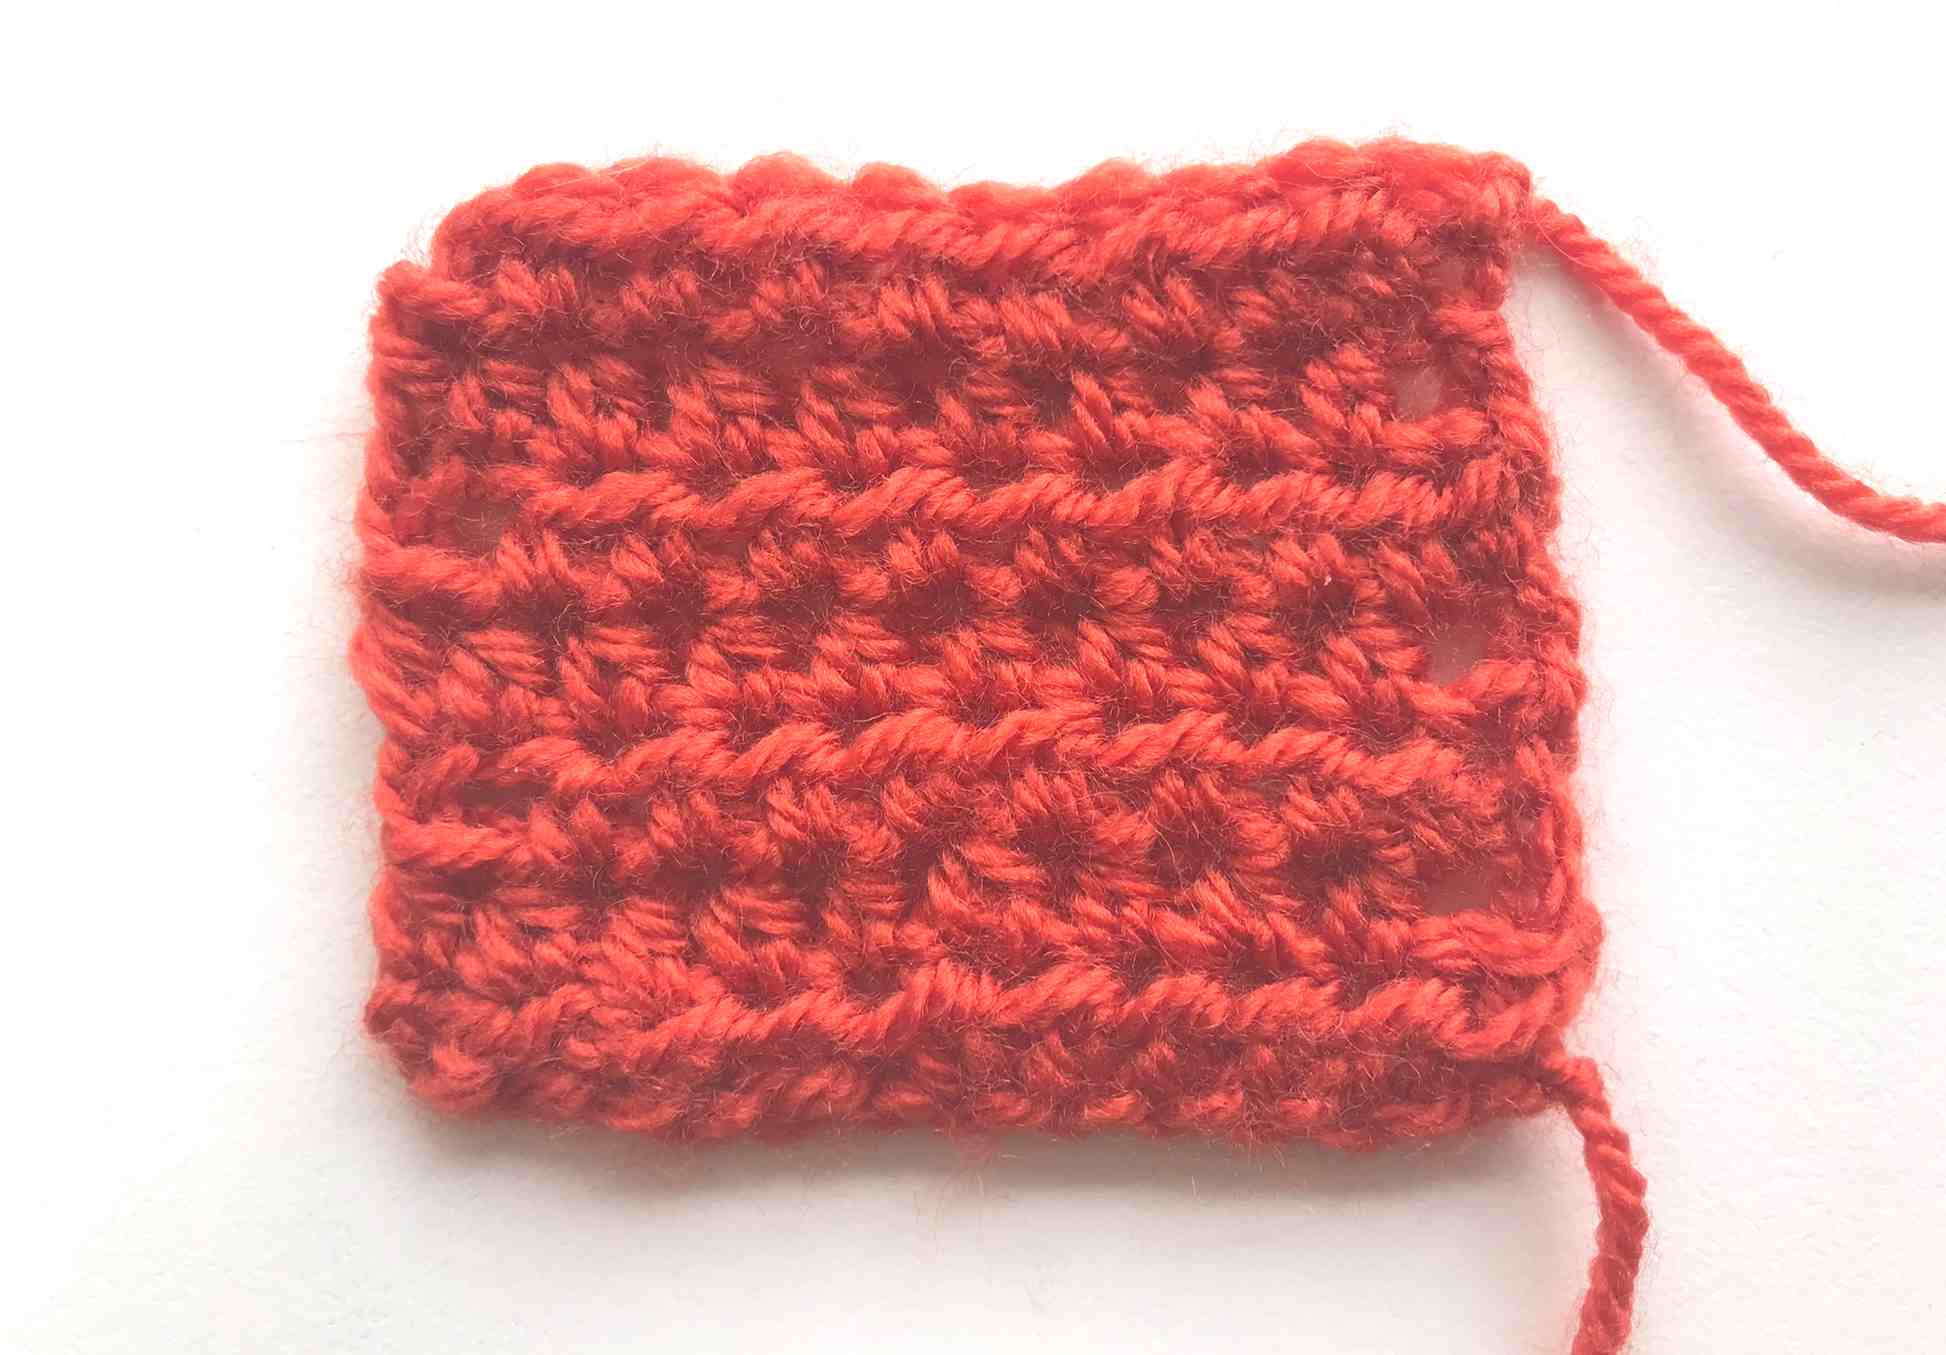 swatch of double crochet stitch